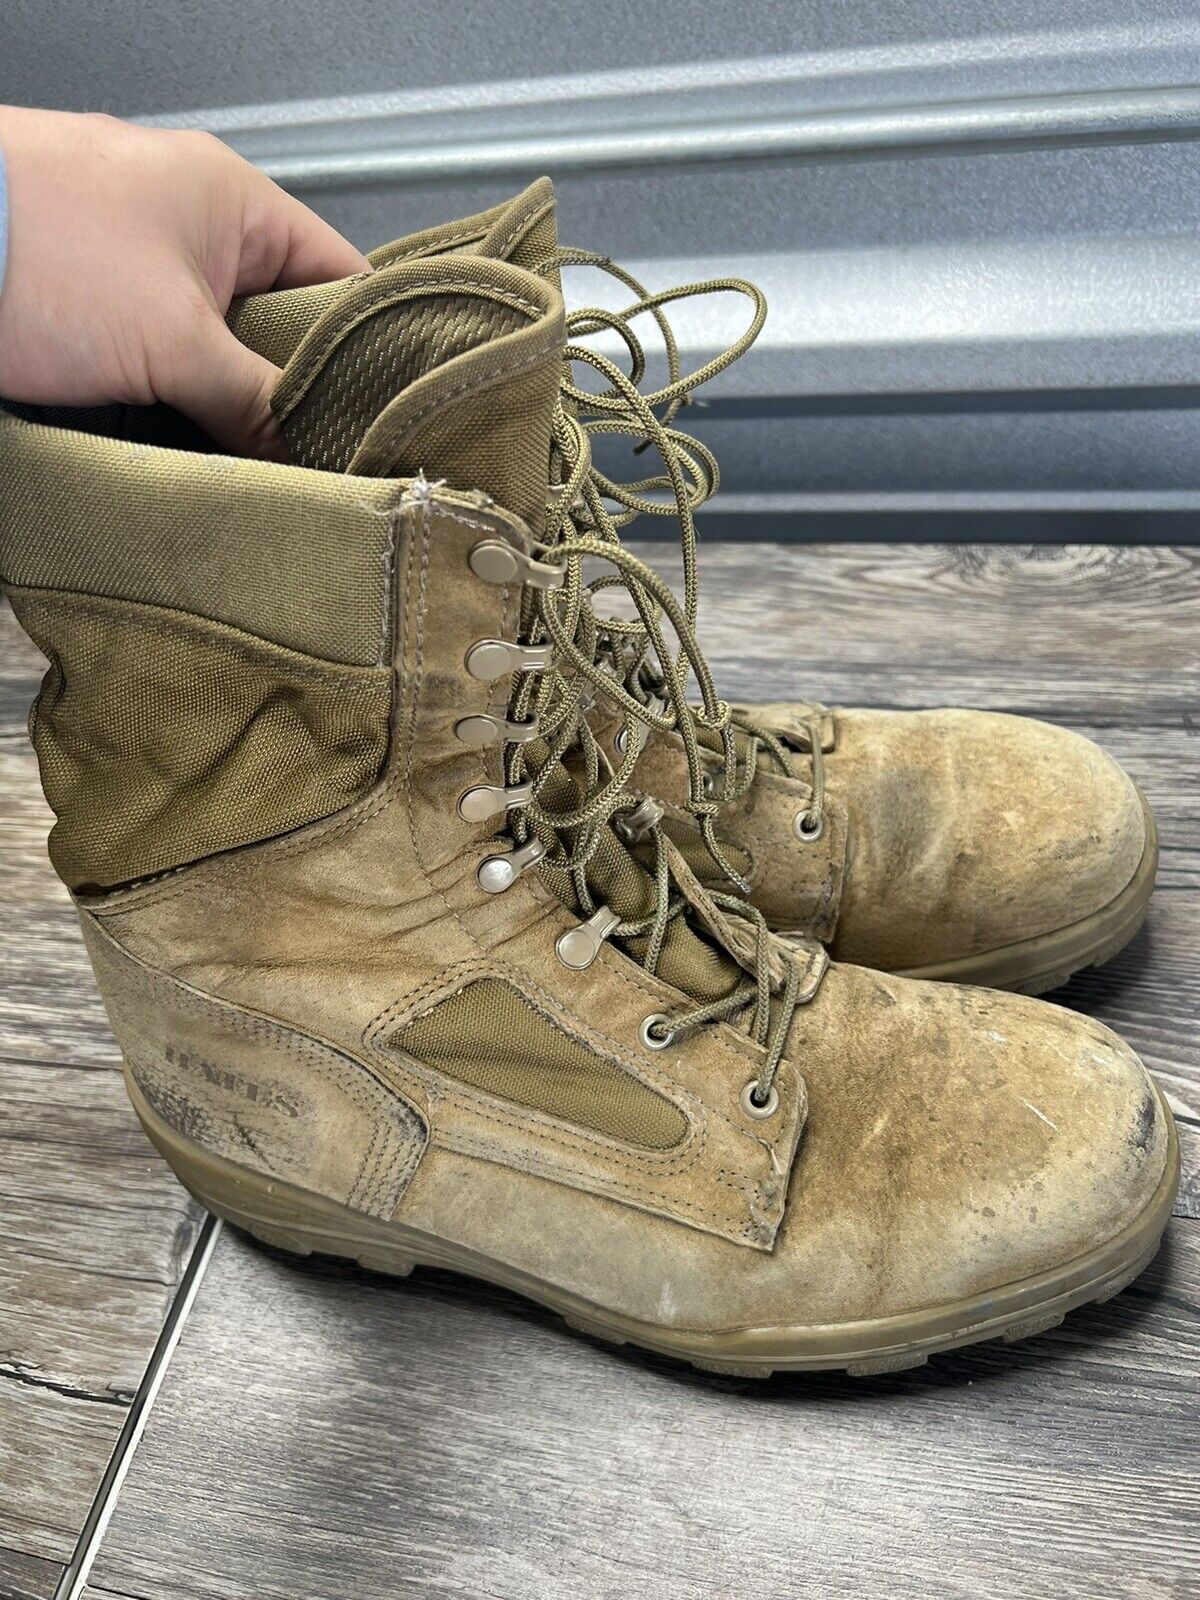 Bates Military Combat Boots Steel Toe Waterproof E70701 Size 12 M Tan